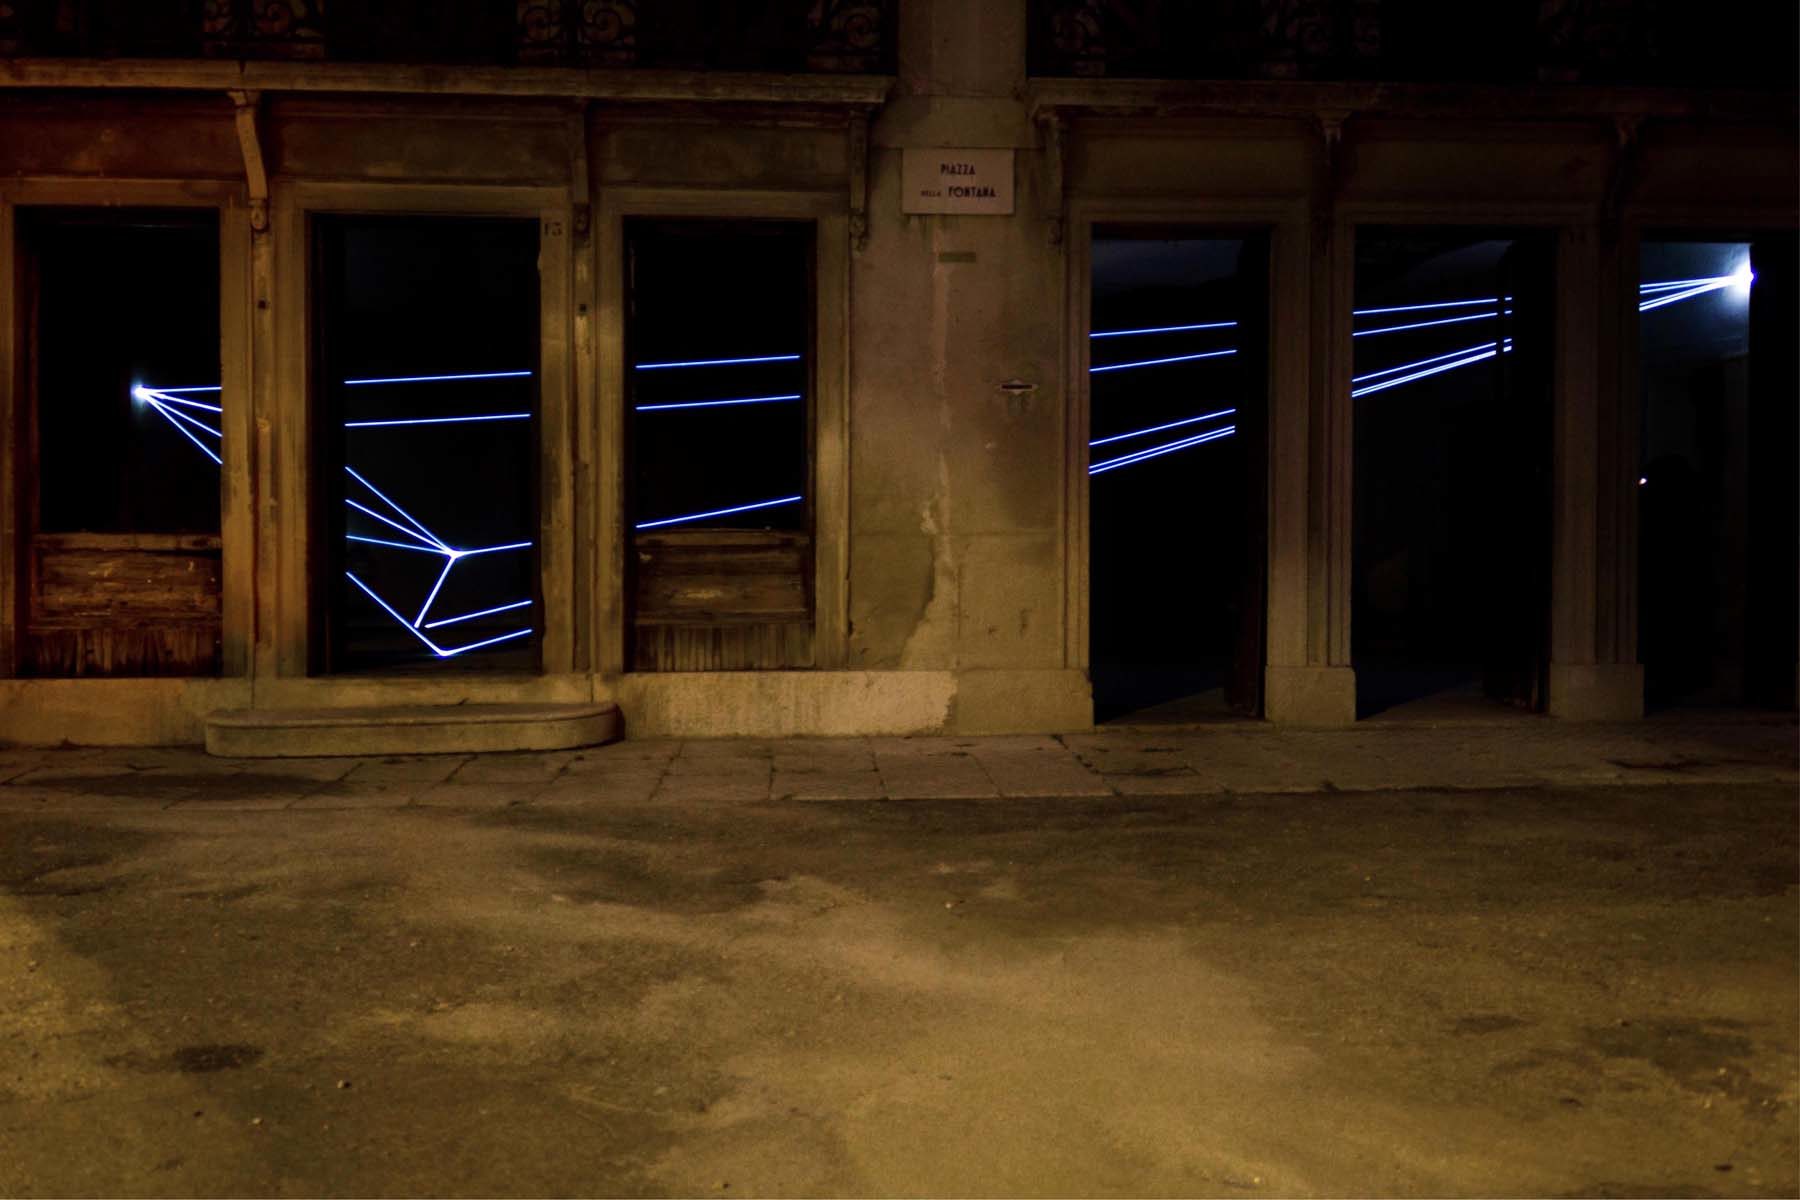 Carlo Bernardini, Aprite la luce, 2011, optical fiber steal, Palazzo Anas, Vittorio Veneto, ph. N.Covre